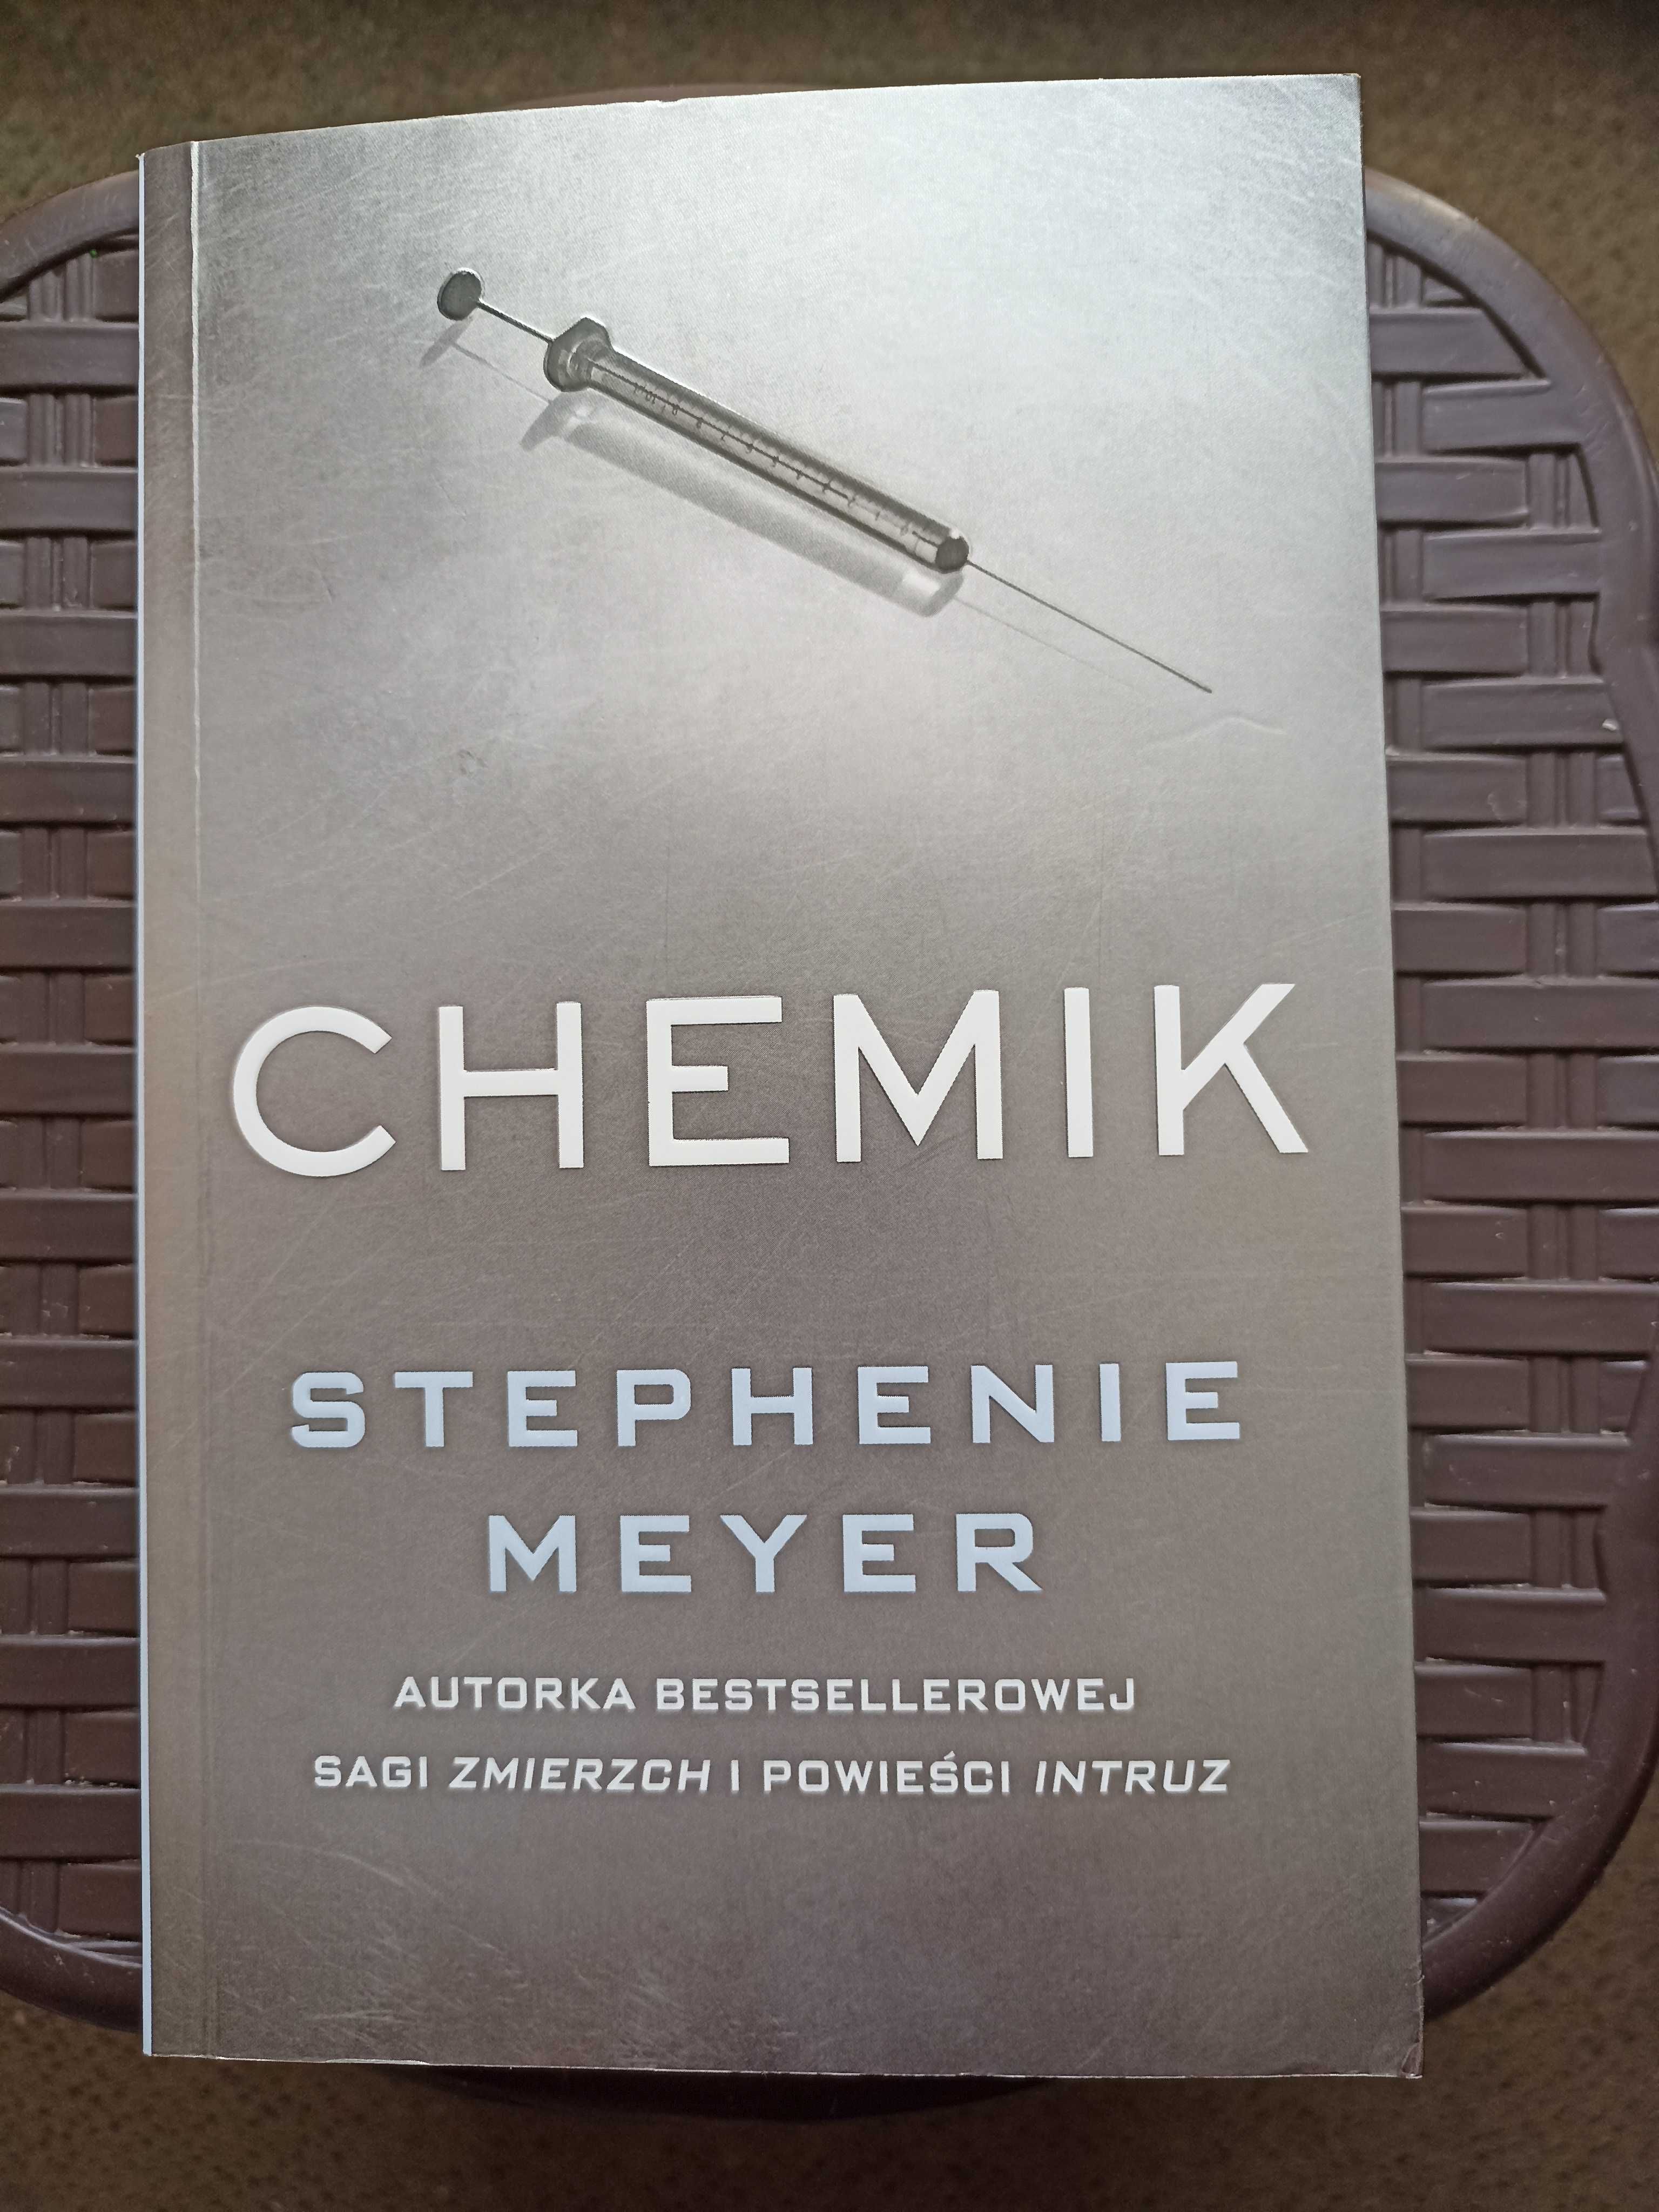 Książka "Chemik"- Stephenie Meyer